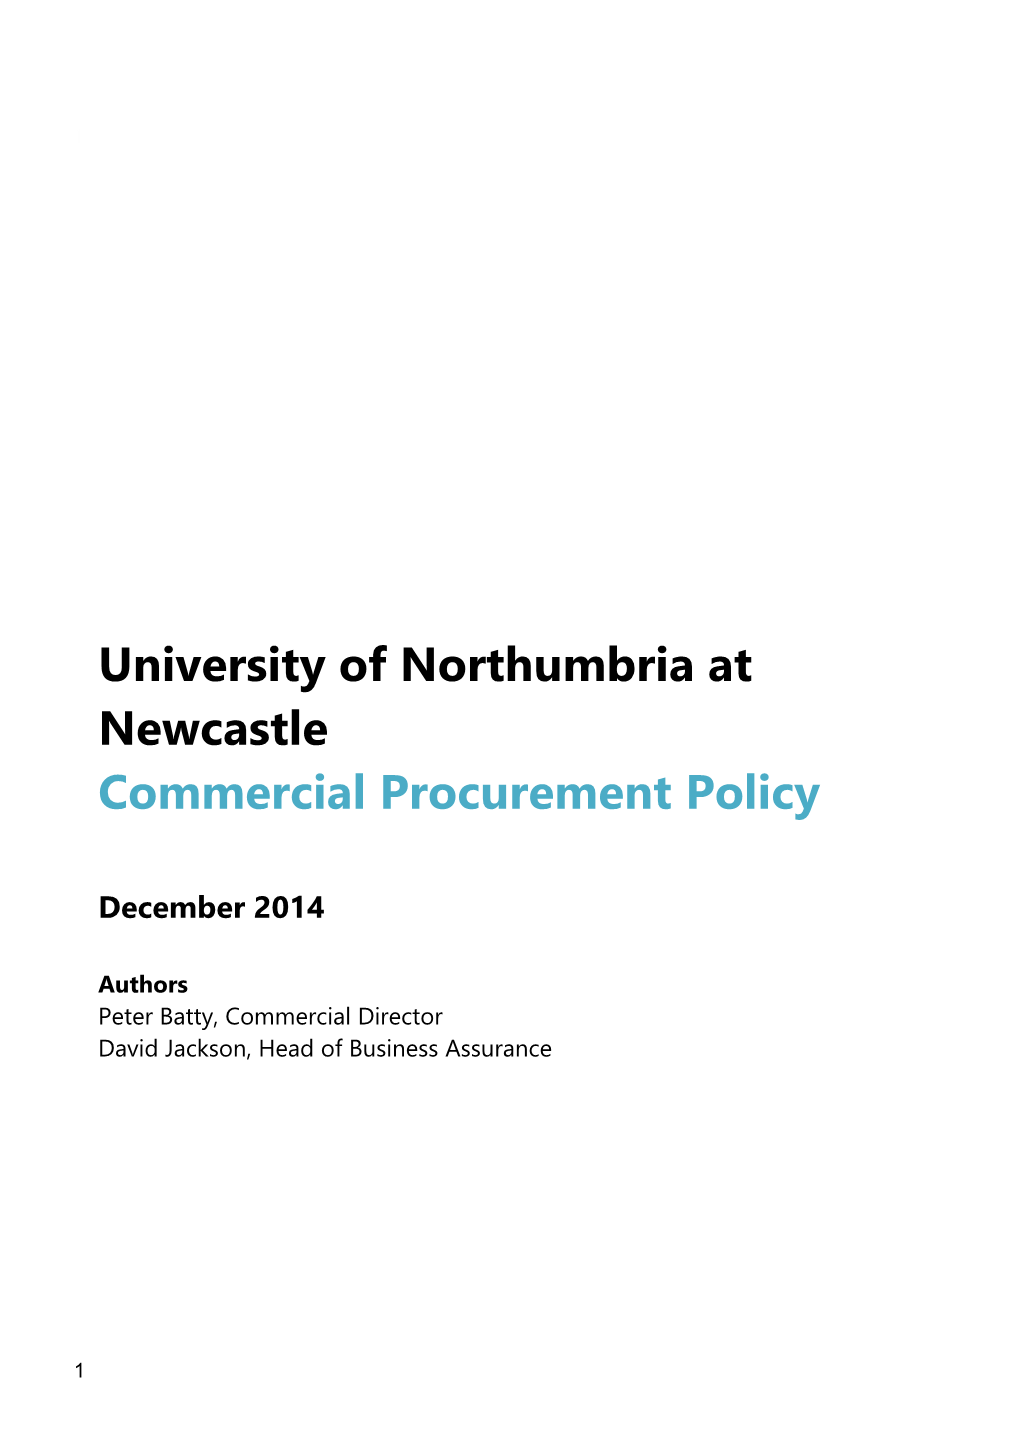 University of Northumbriaat Newcastle